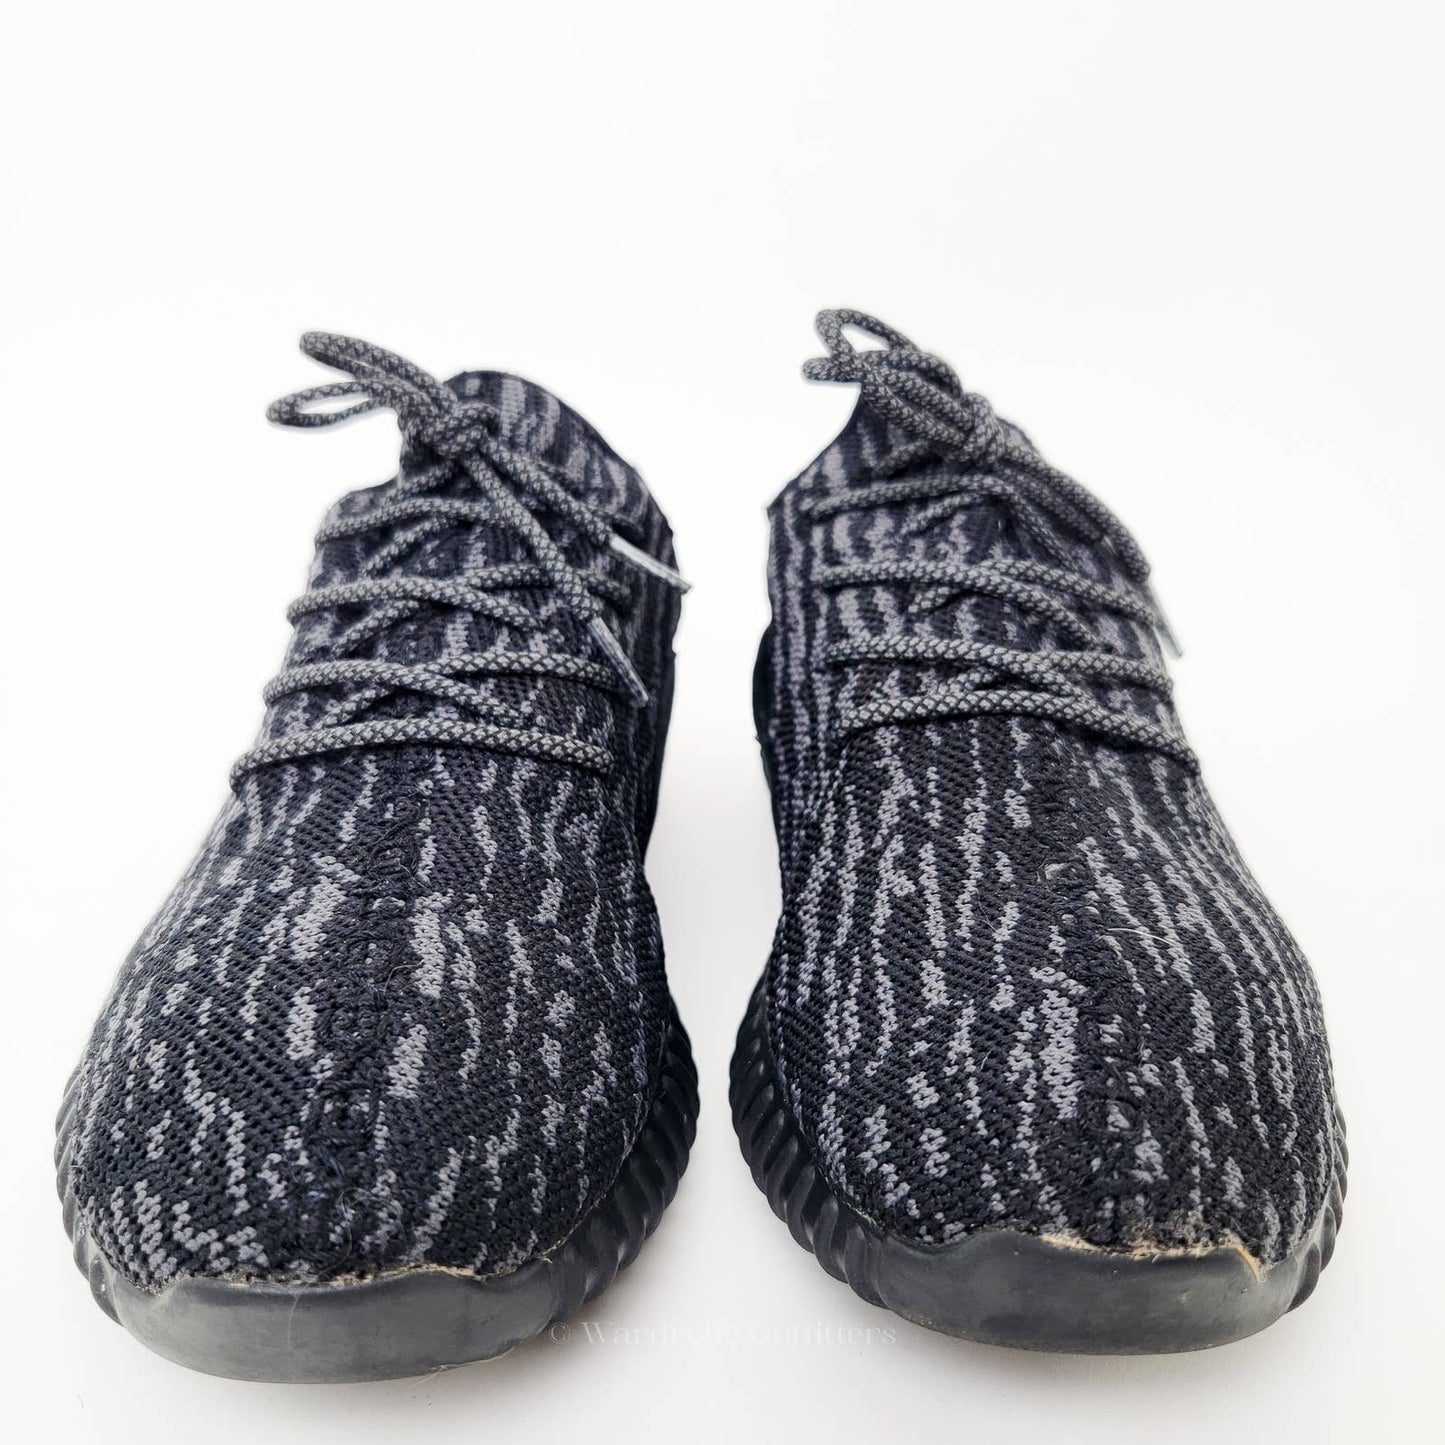 adidas Yeezy Boost 350 Pirate Black (2015) - 11.5